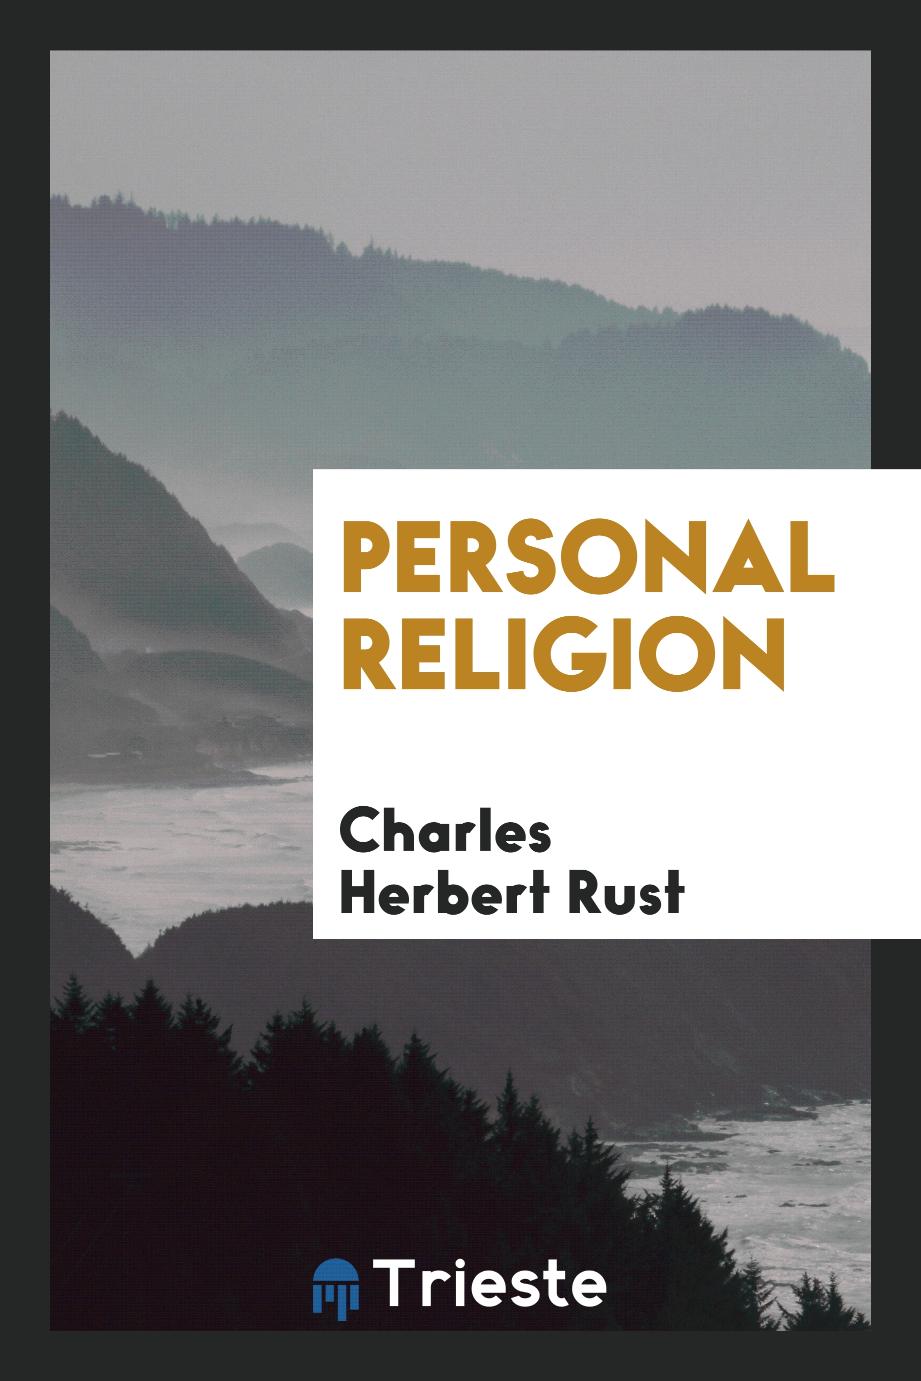 Personal religion